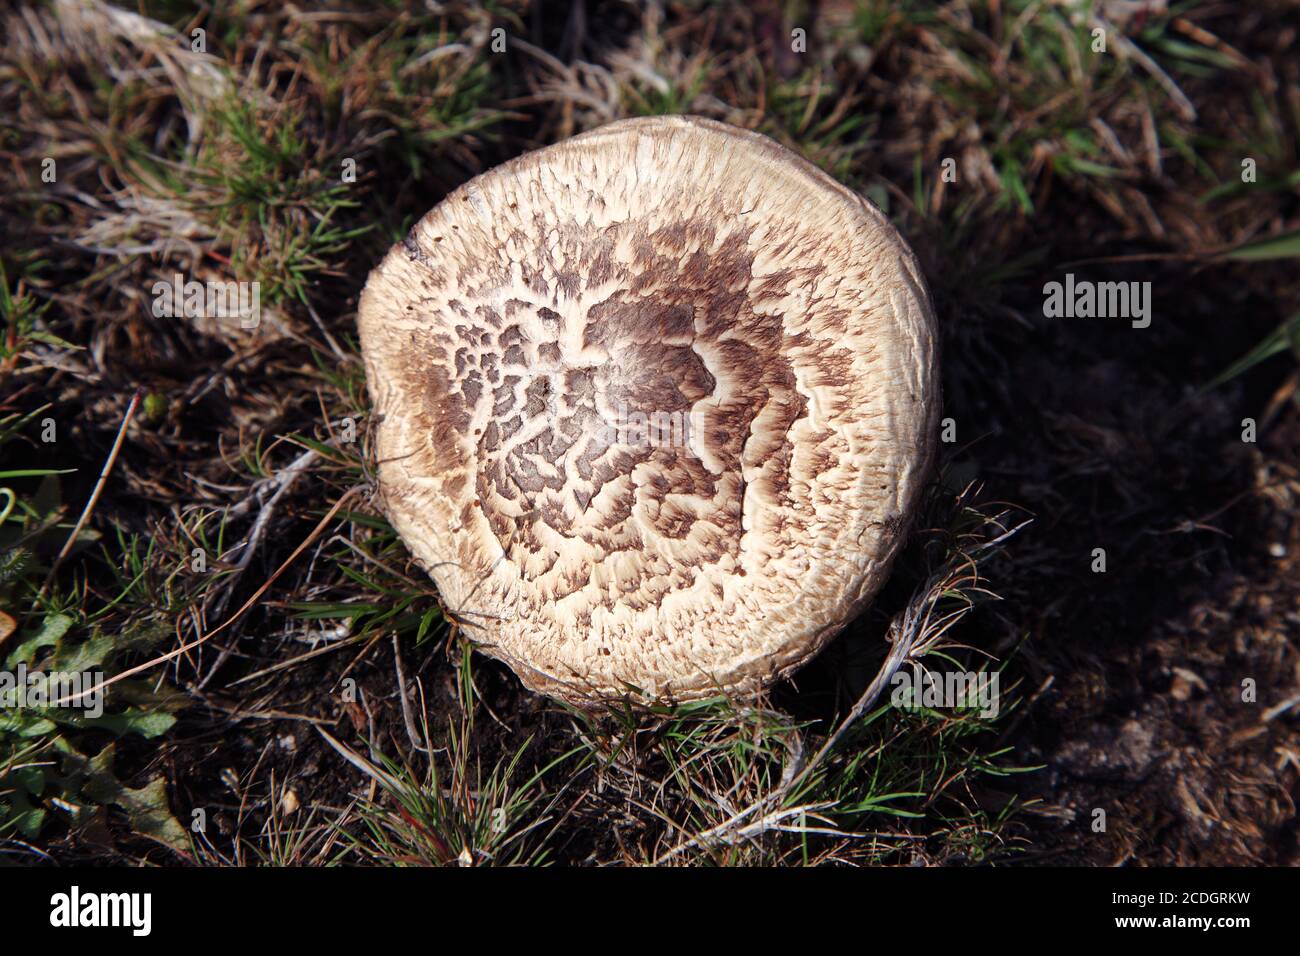 Agaricus augustus ‘The Prince’ mushroom, part of agaricomycetes  basidiomycota class. Stock Photo